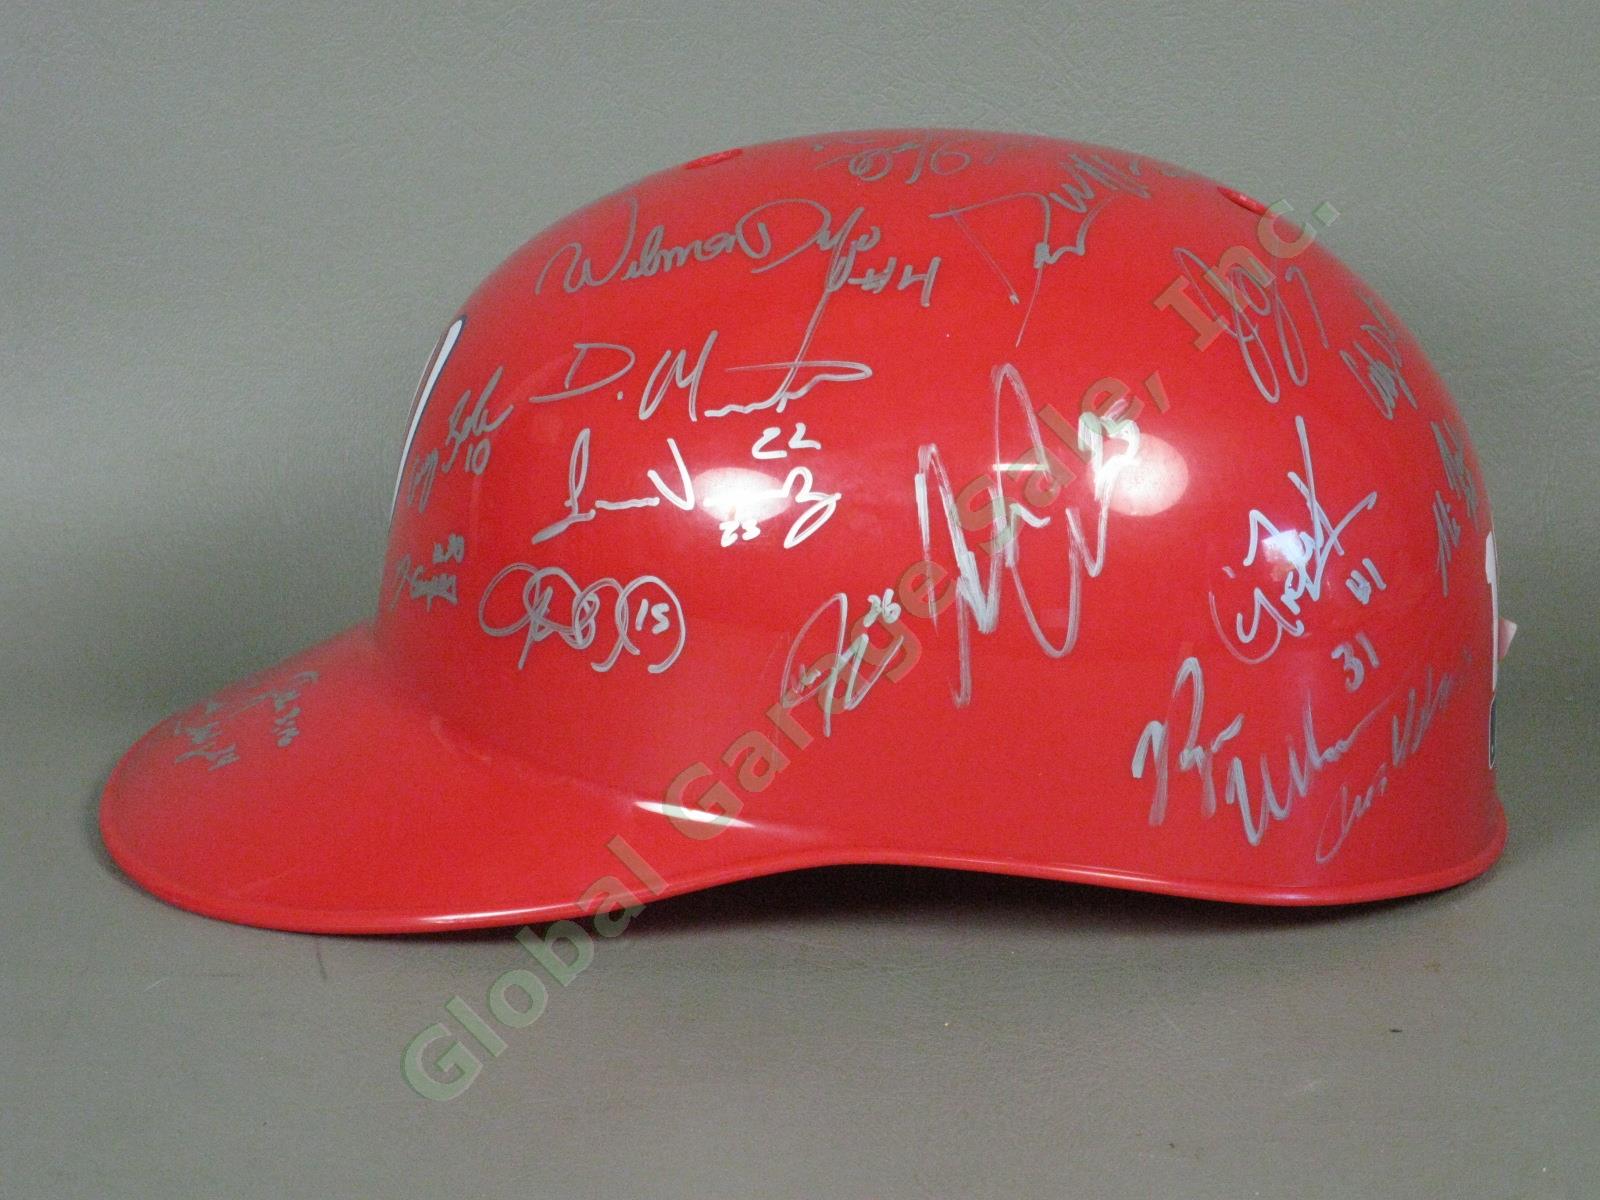 2013 Auburn Doubledays Team Signed Baseball Helmet NYPL Washington Nationals NR 3